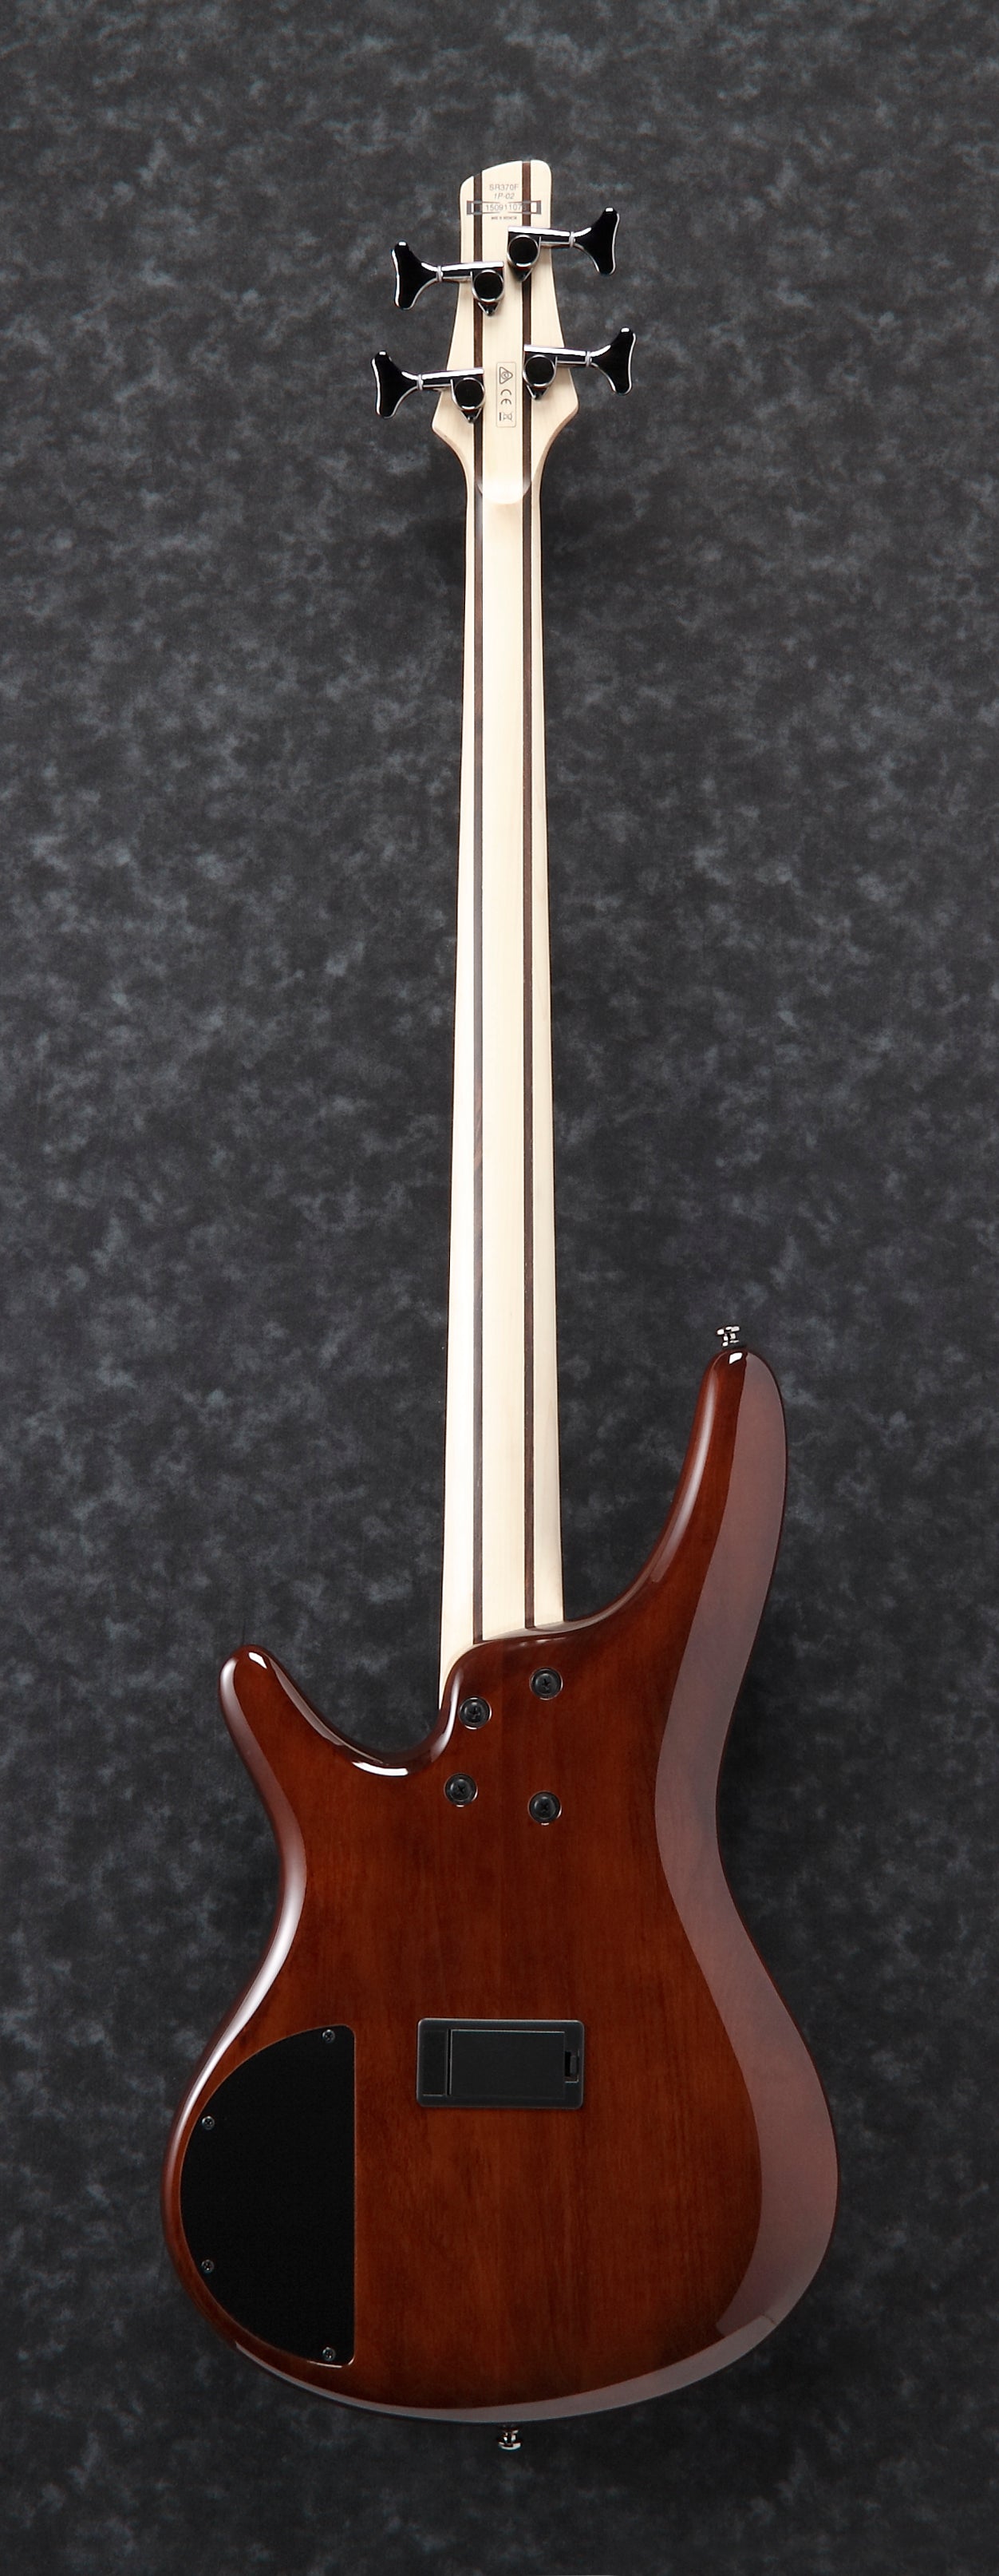 Ibanez SR370EF Fretless 4-String Bass Guitar - Brown Burst